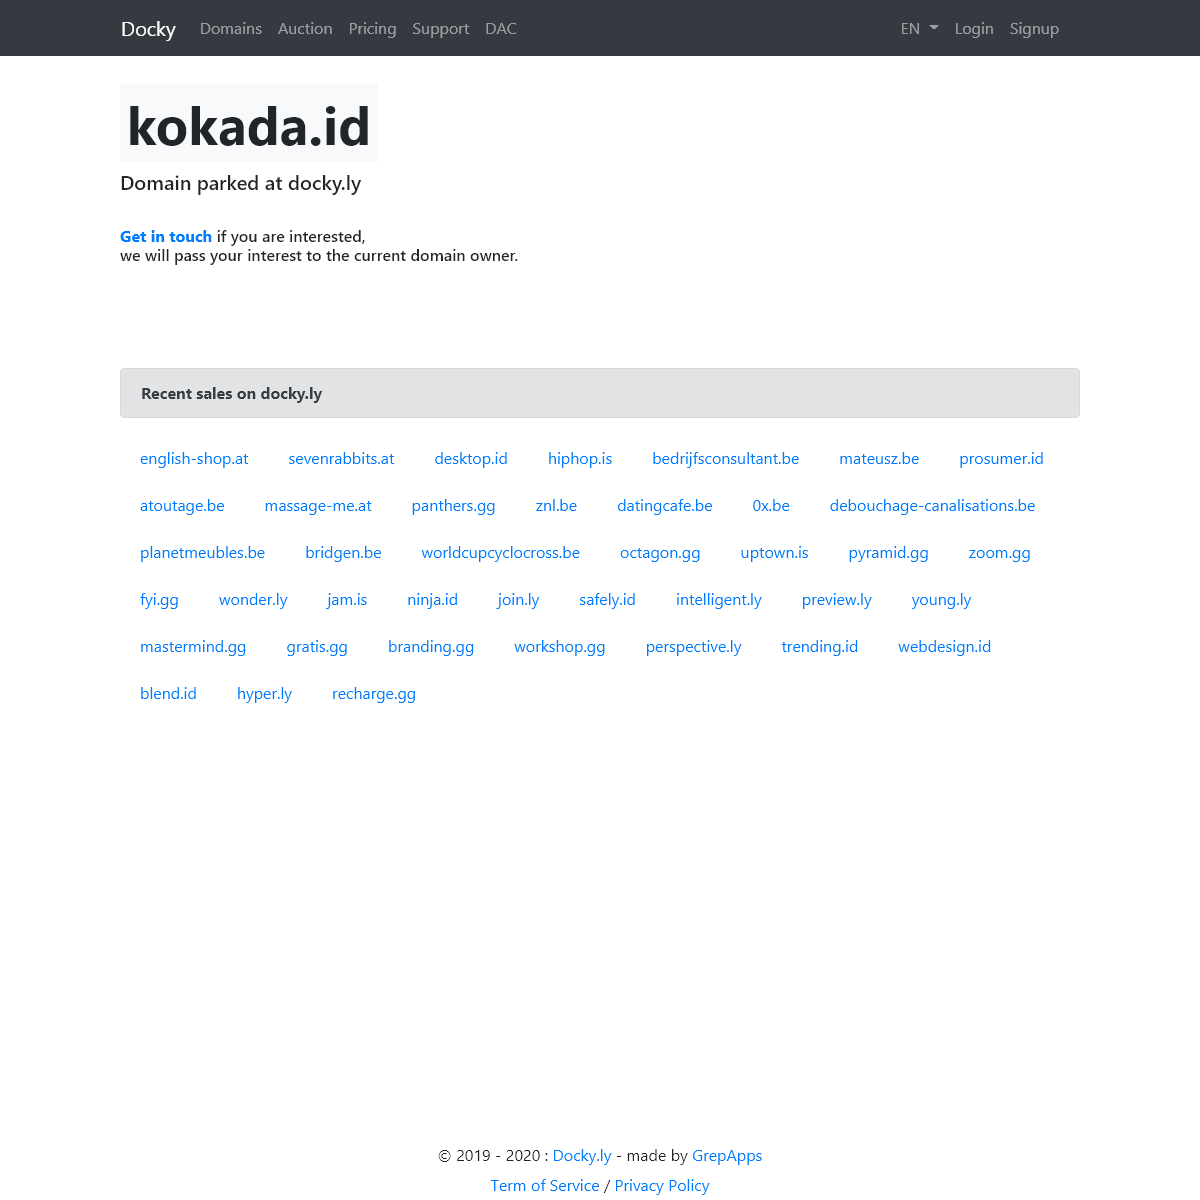 A complete backup of kokada.id